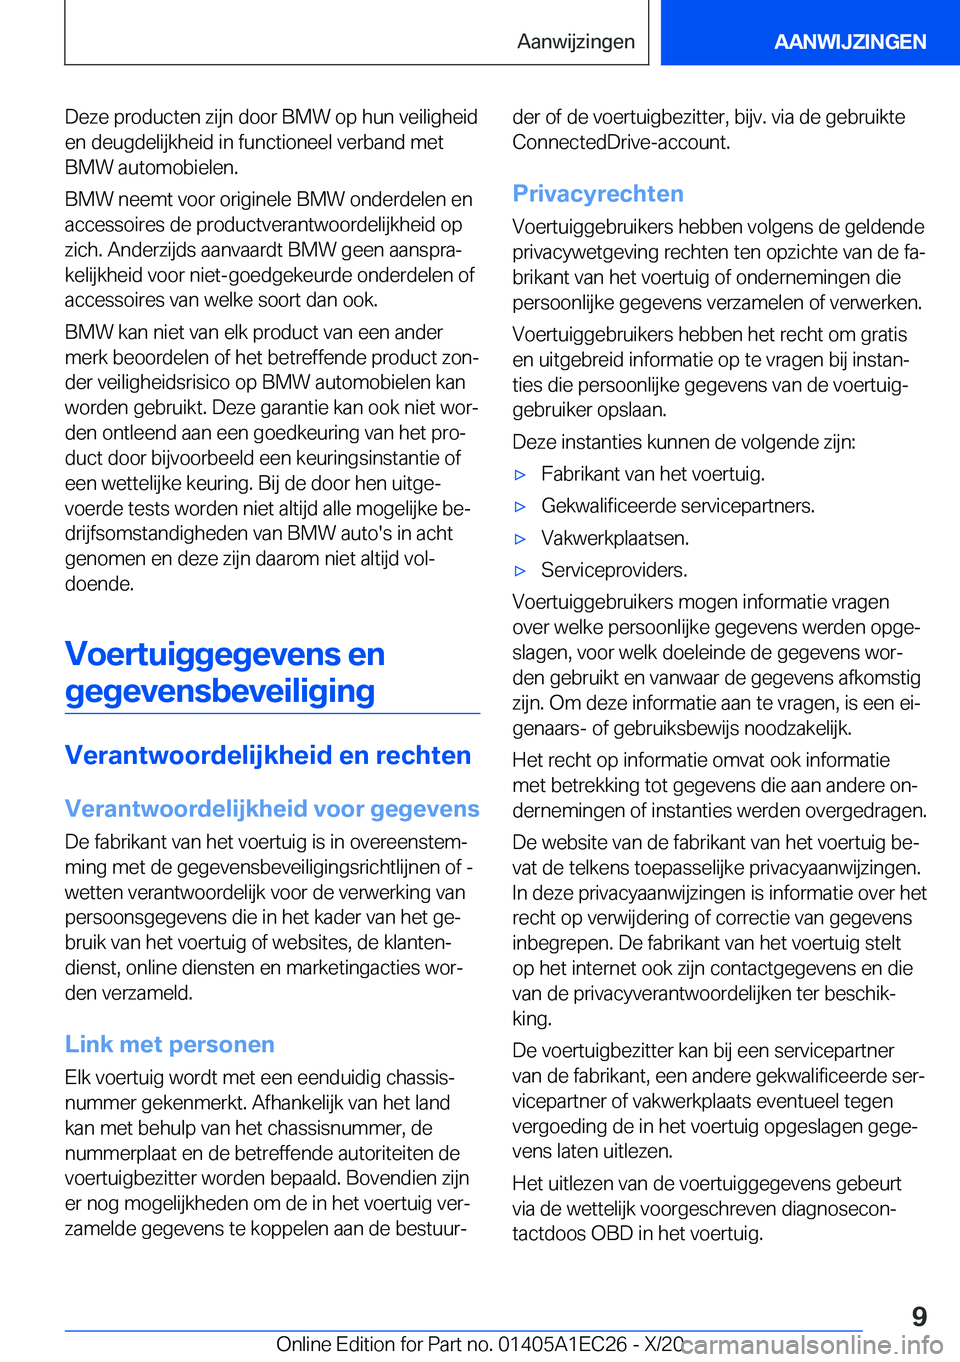 BMW 8 SERIES GRAN COUPE 2021  Instructieboekjes (in Dutch) �D�e�z�e��p�r�o�d�u�c�t�e�n��z�i�j�n��d�o�o�r��B�M�W��o�p��h�u�n��v�e�i�l�i�g�h�e�i�d�e�n��d�e�u�g�d�e�l�i�j�k�h�e�i�d��i�n��f�u�n�c�t�i�o�n�e�e�l��v�e�r�b�a�n�d��m�e�t�B�M�W��a�u�t�o�m�o